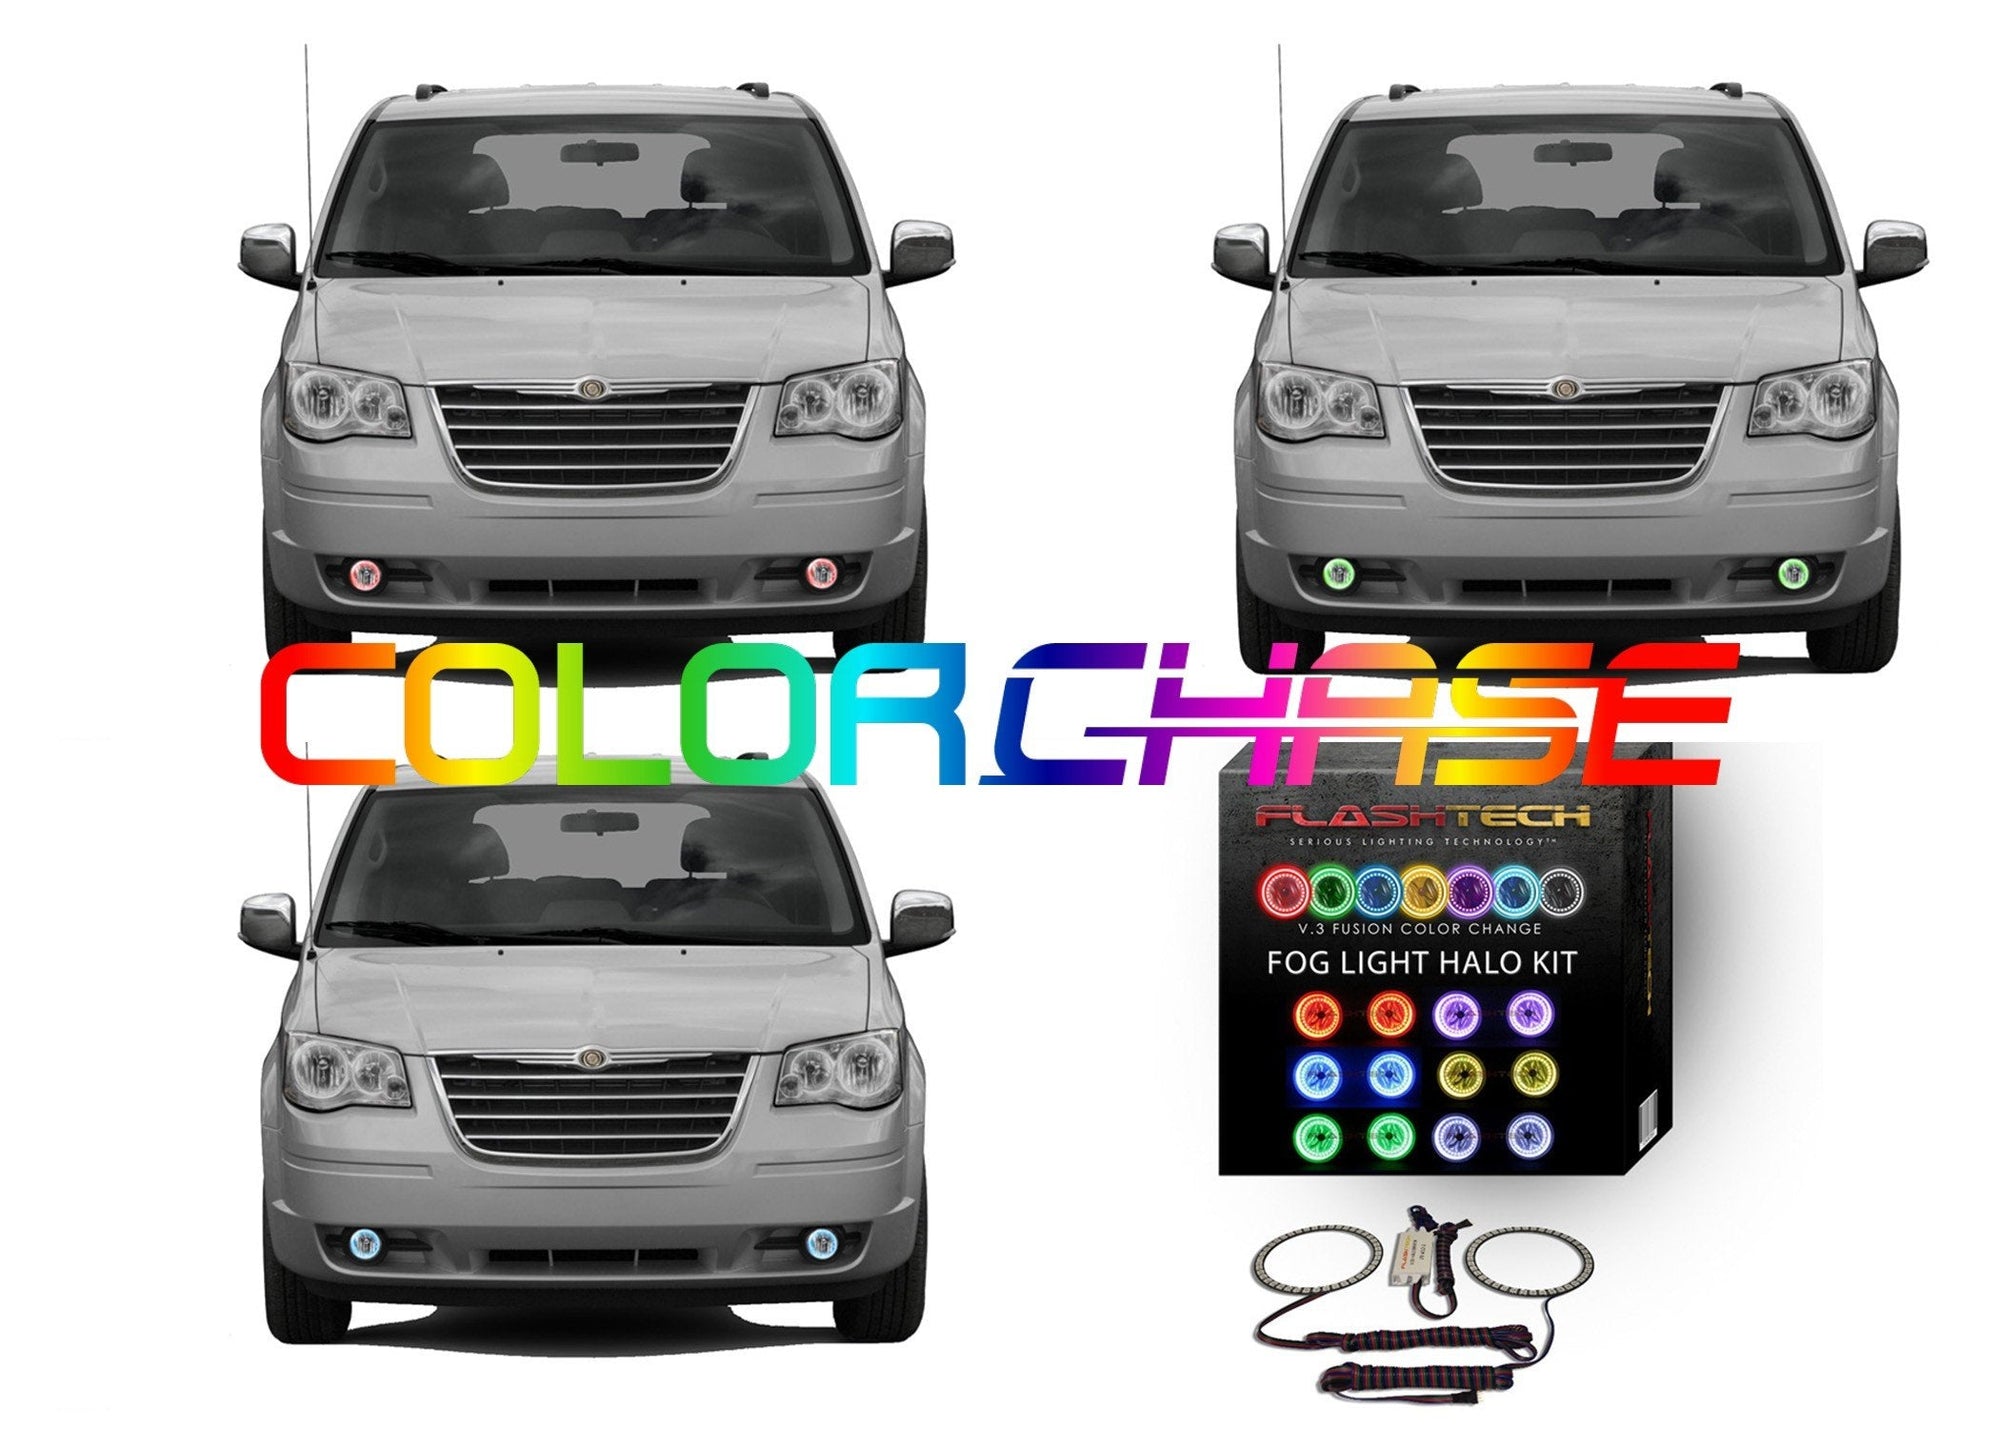 Chrysler Town & Country ColorChase LED Halo Fog Light Kit 2005-2010